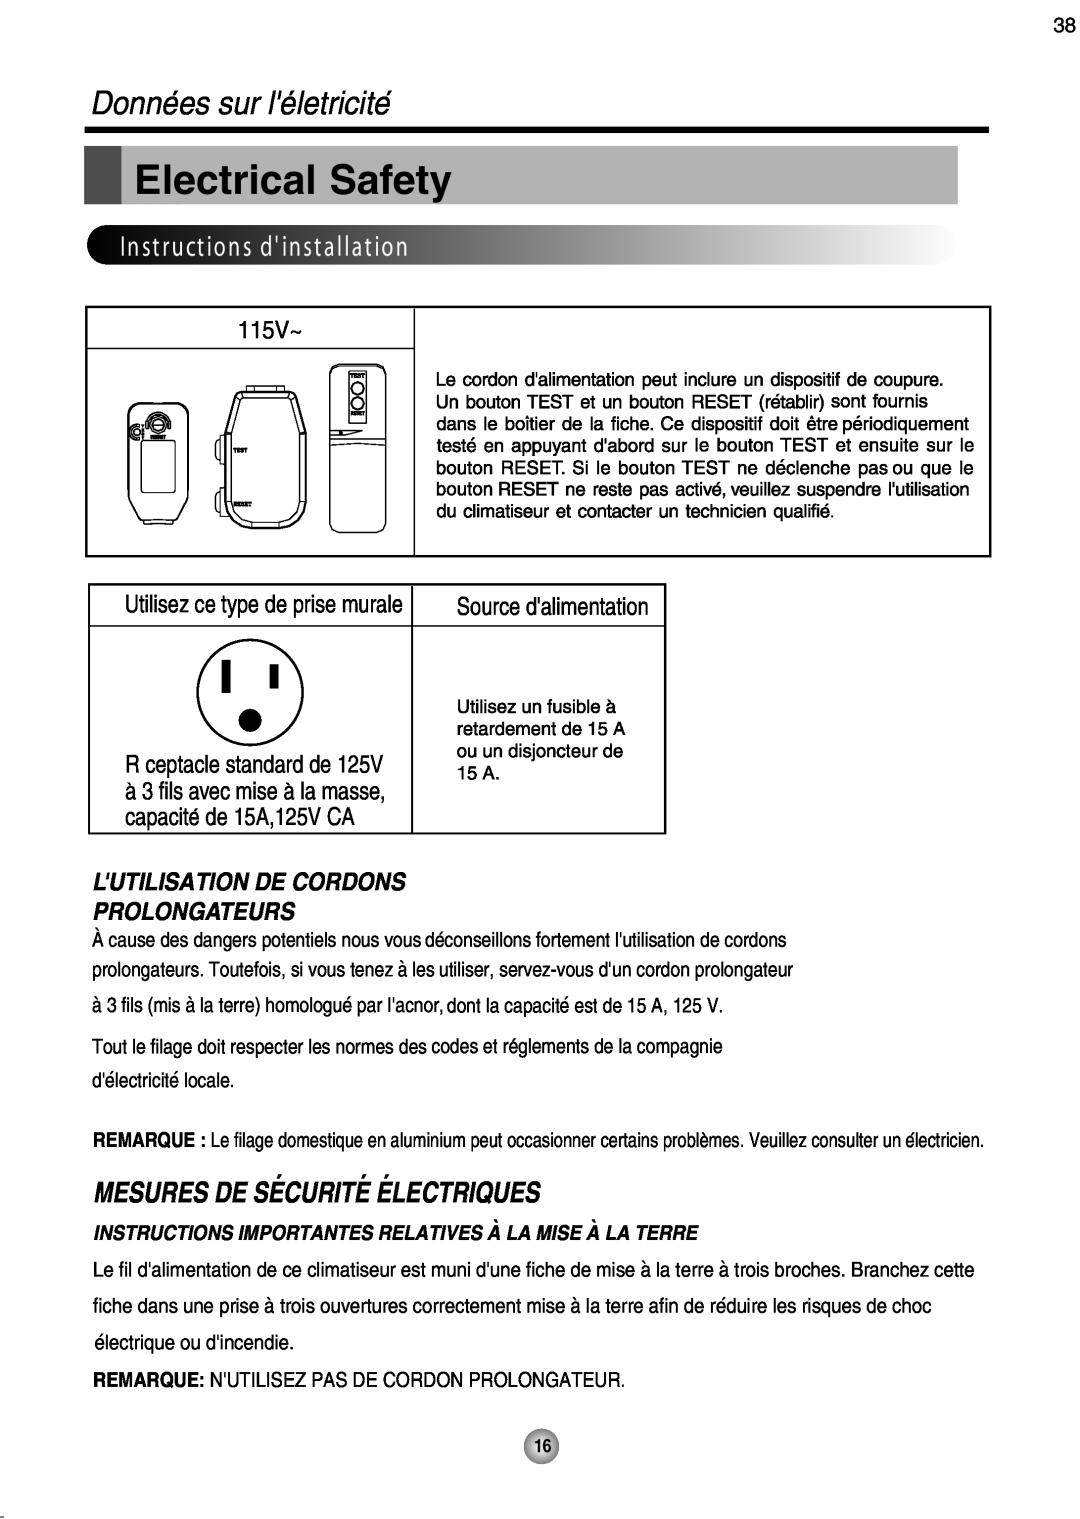 Friedrich CP08 sur leletricite` `, Electrical Safety, ElectricalIns u onDatas d insta lla tion, Donnees`, 115V~ 